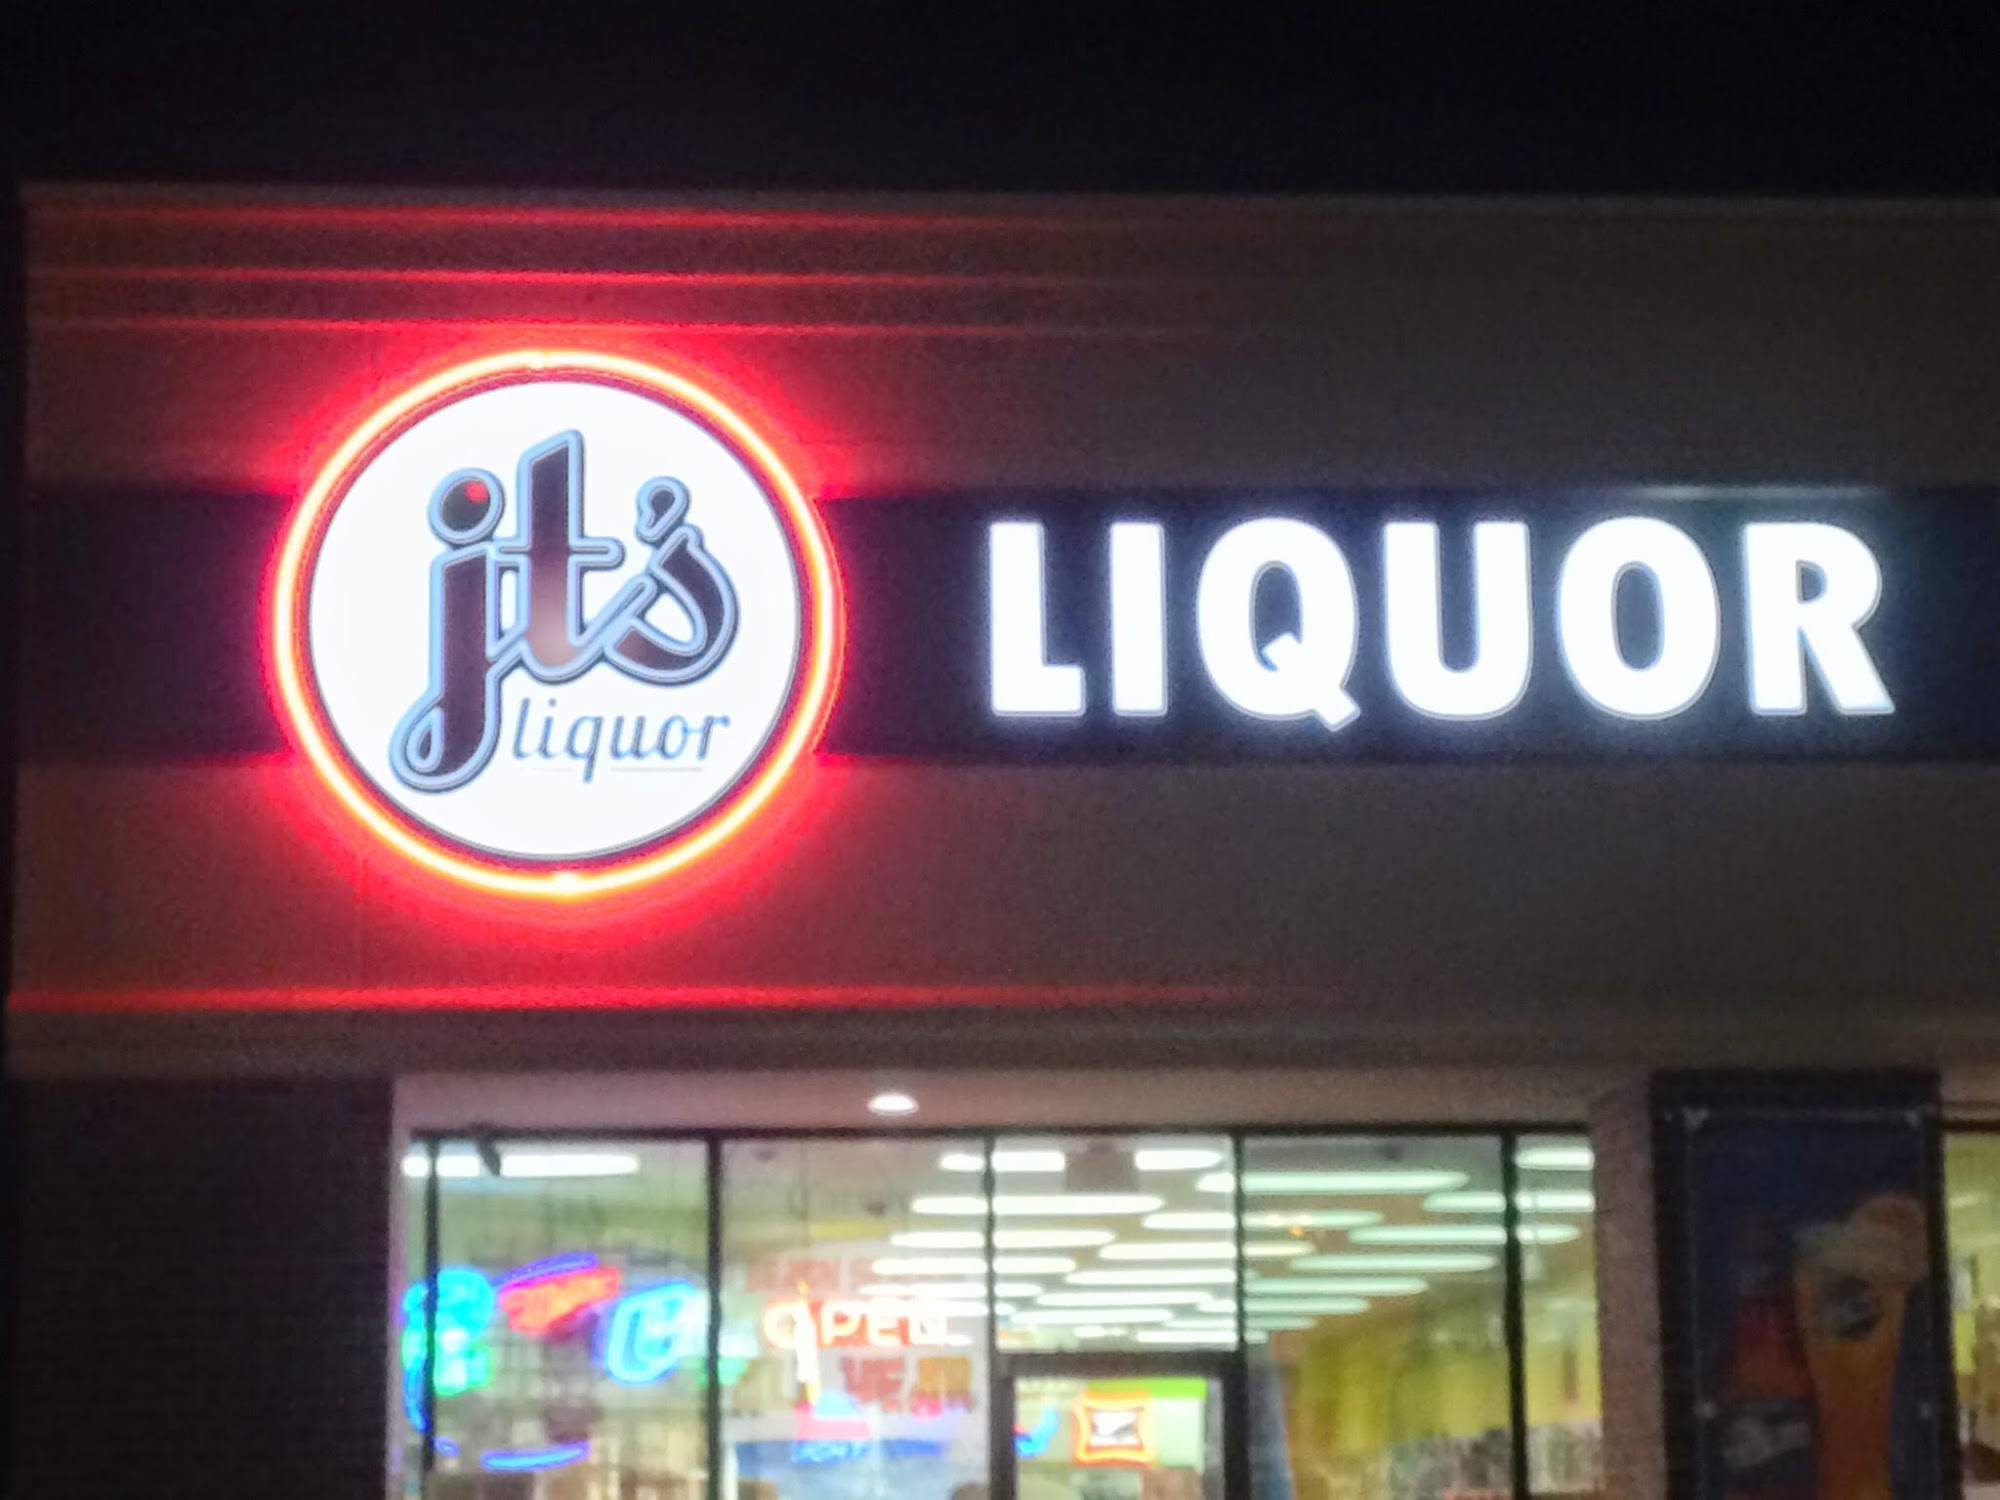 Jt's Liquor